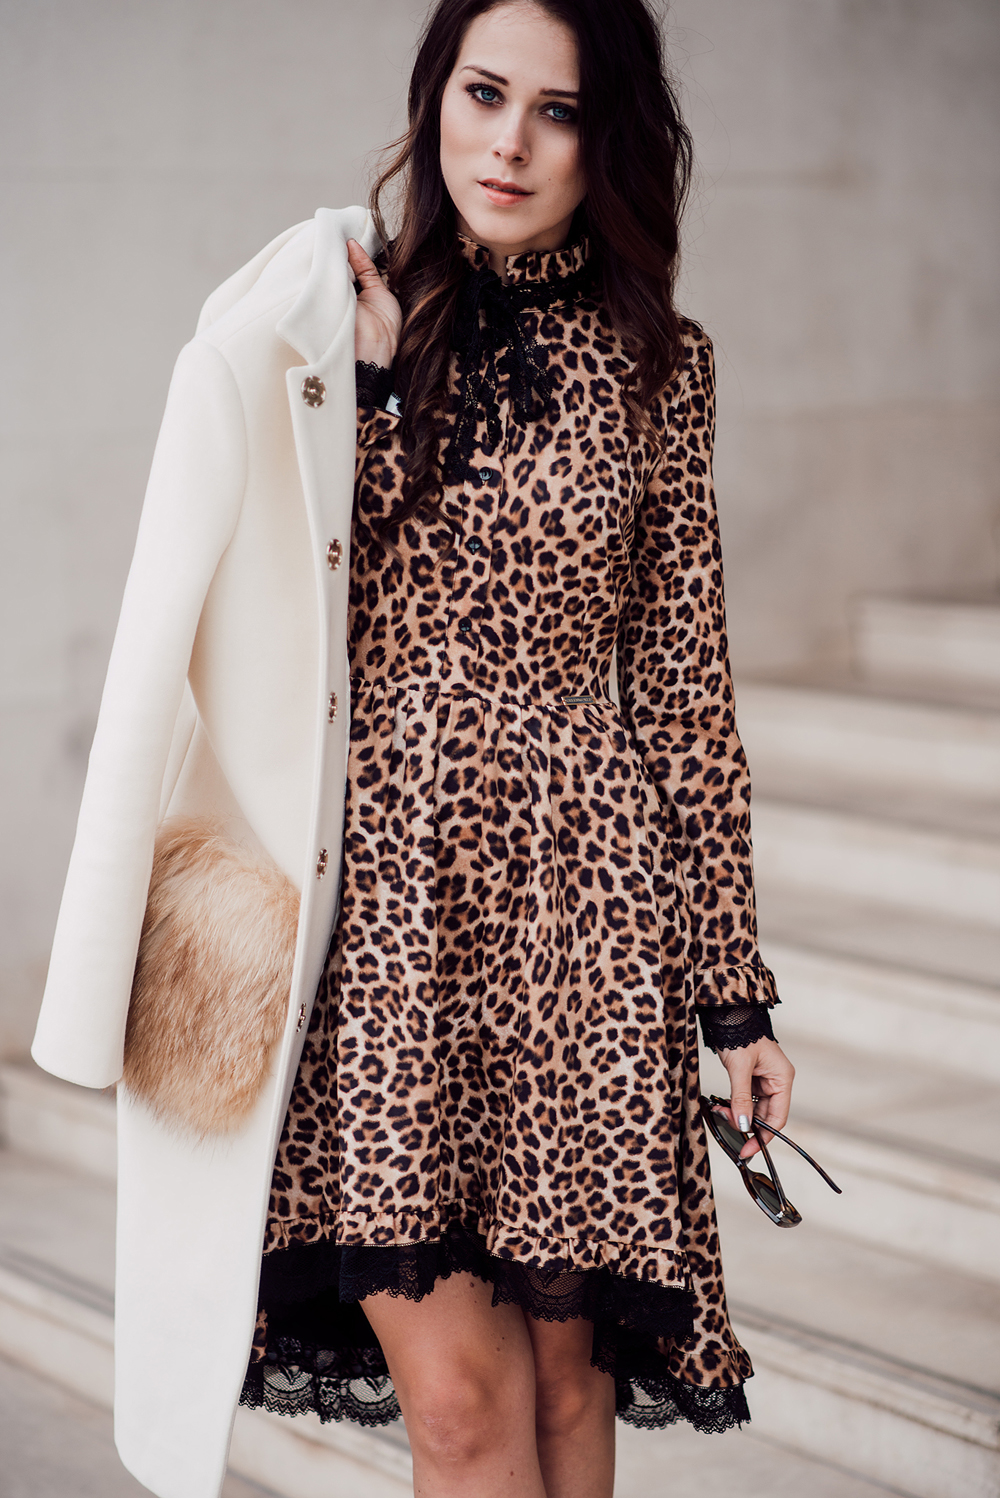 eva-ahacevcic_love-eva_terminal3_ootd_leopard-print_dress_fashion-blogger-11